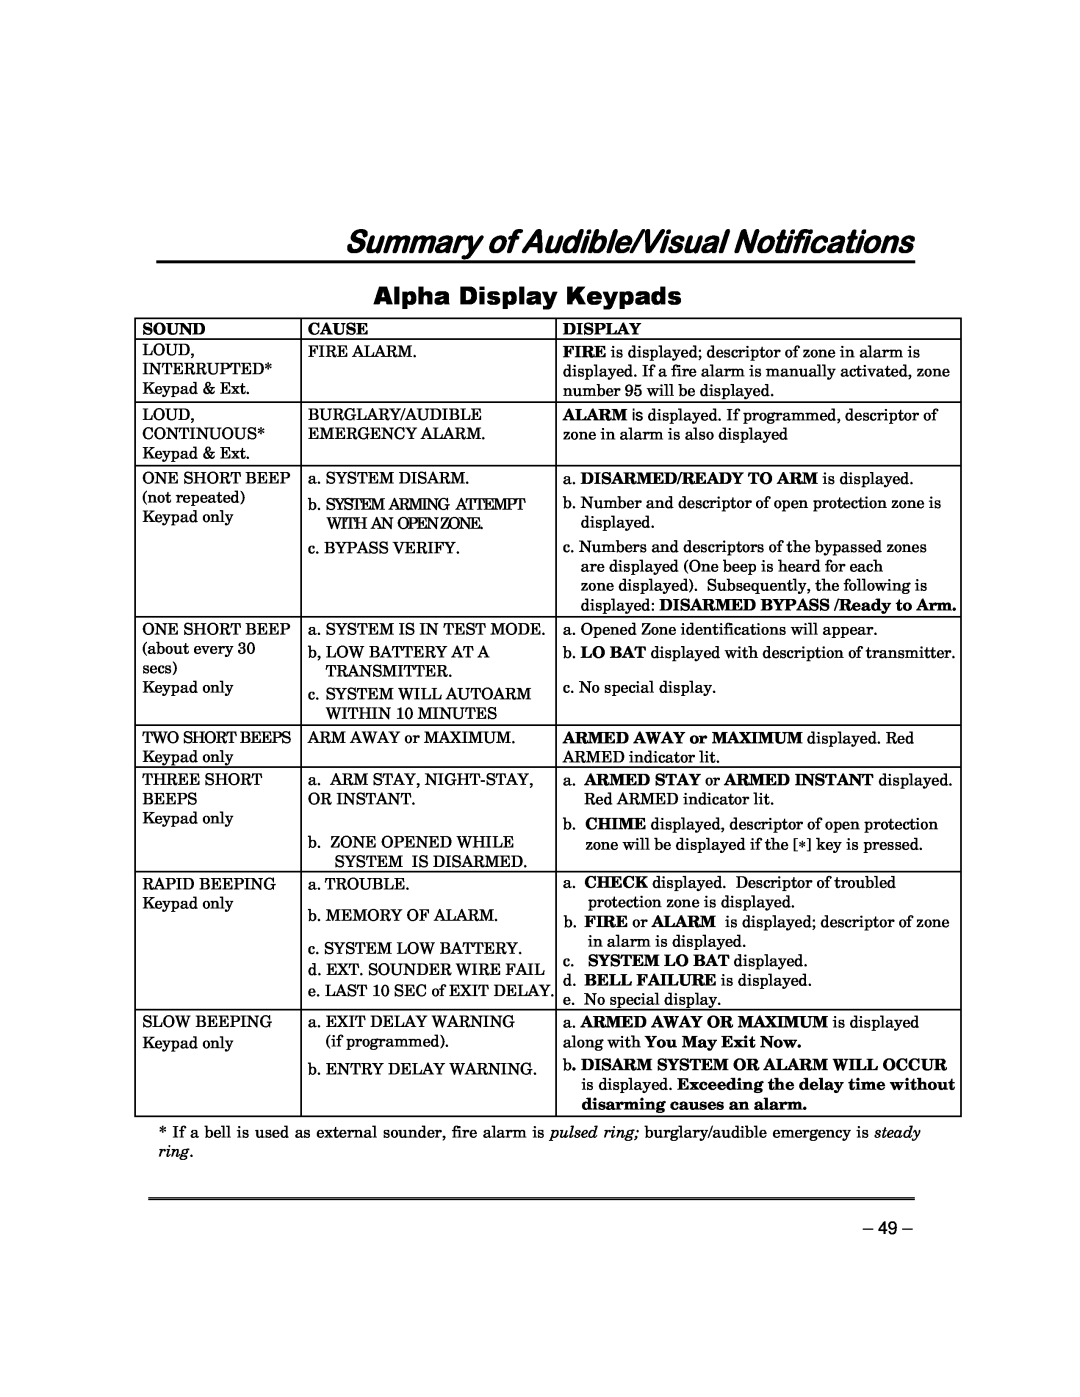 Garmin FA168CPS manual Summary of Audible/Visual Notifications, Alpha Display Keypads 